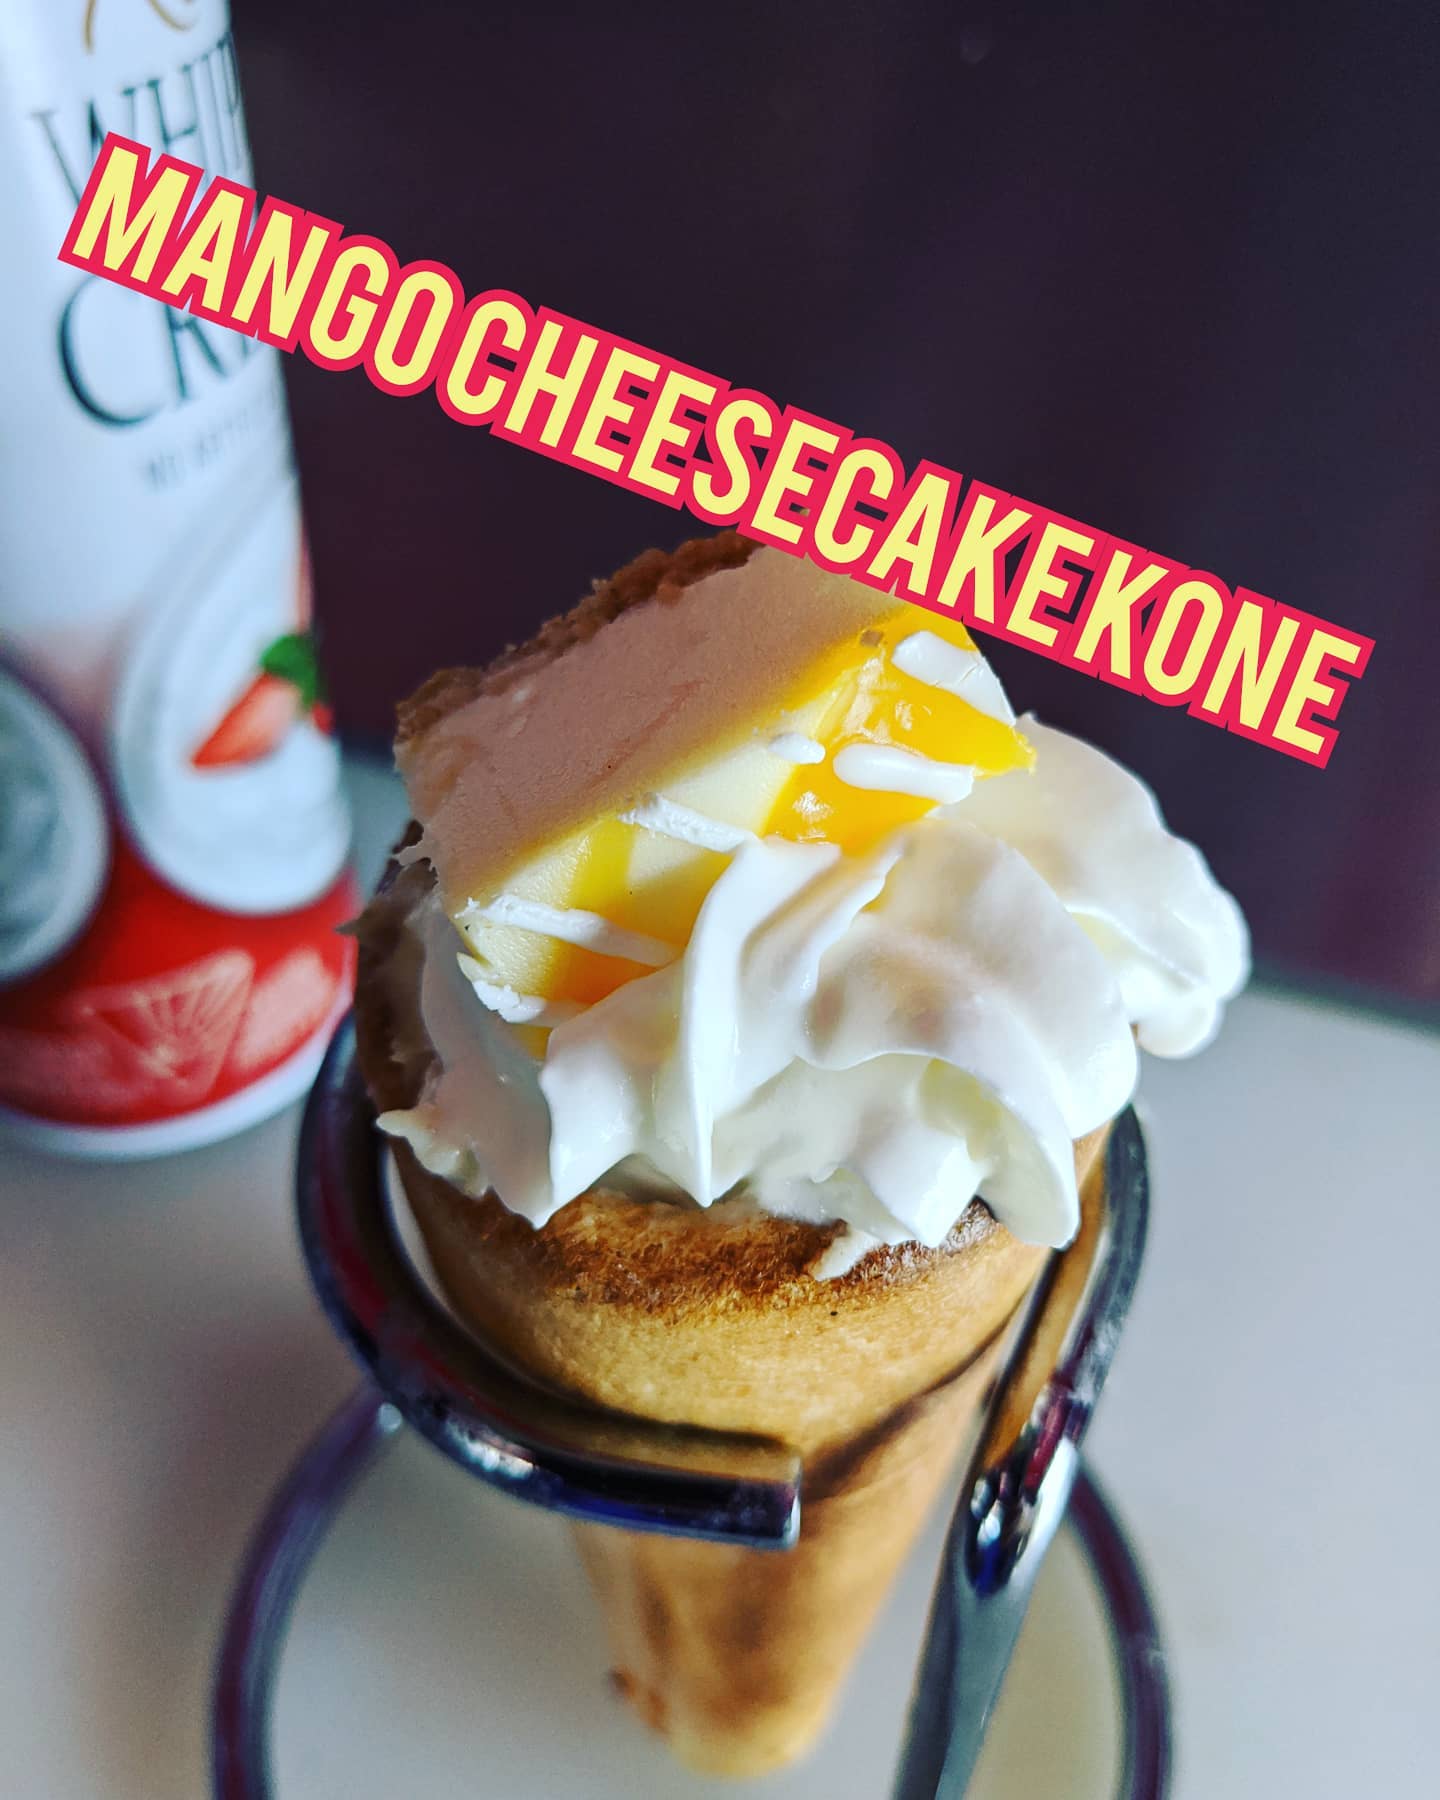 Mango Cheese Cake Kone